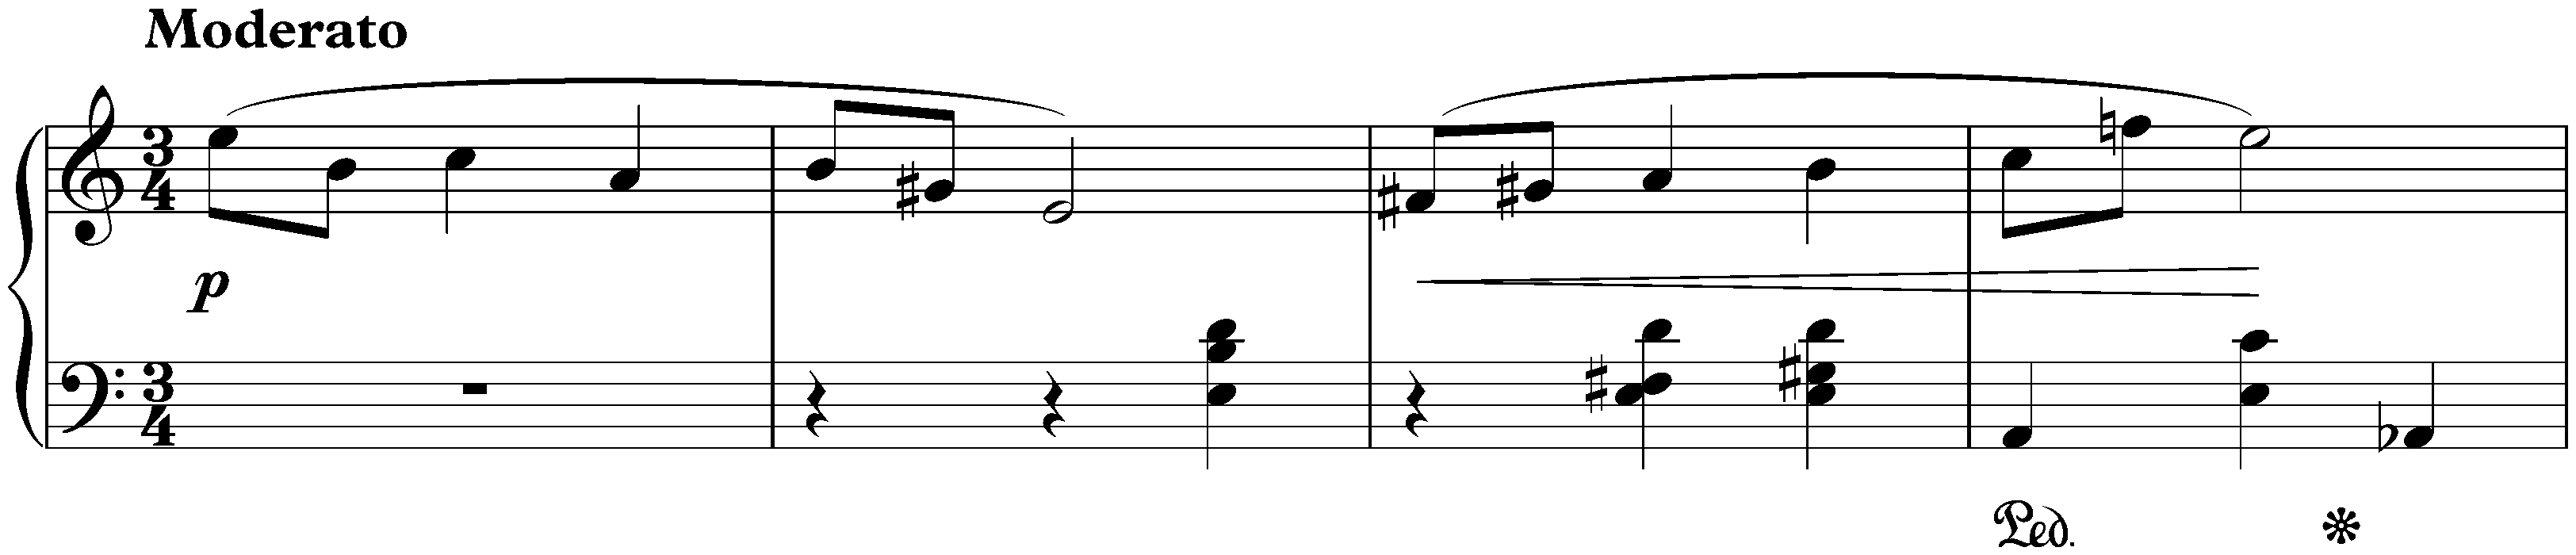 Three Mazurkas, op. 59; 1. A minor